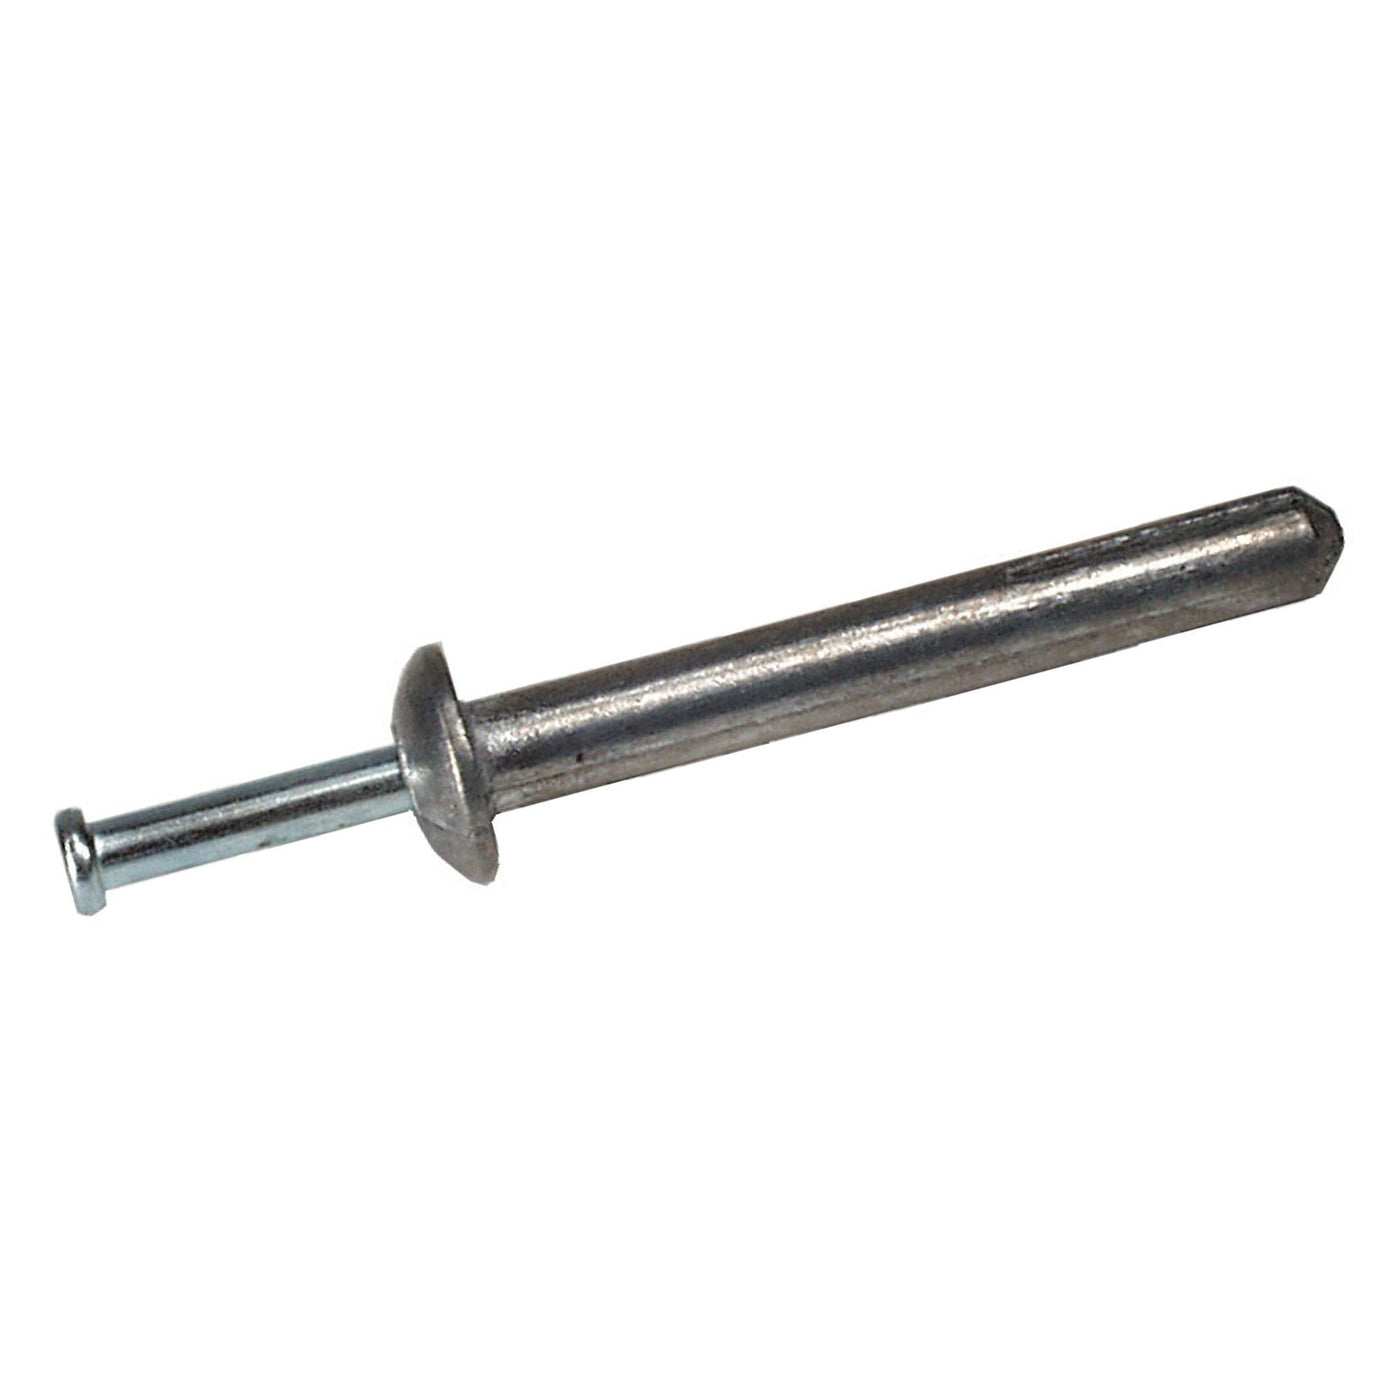 1/4 x 1 1/4 Simpson Zinc Nailon™ Pin Drive Anchor Mushroom Head 304 Stainless Steel Pin (100)